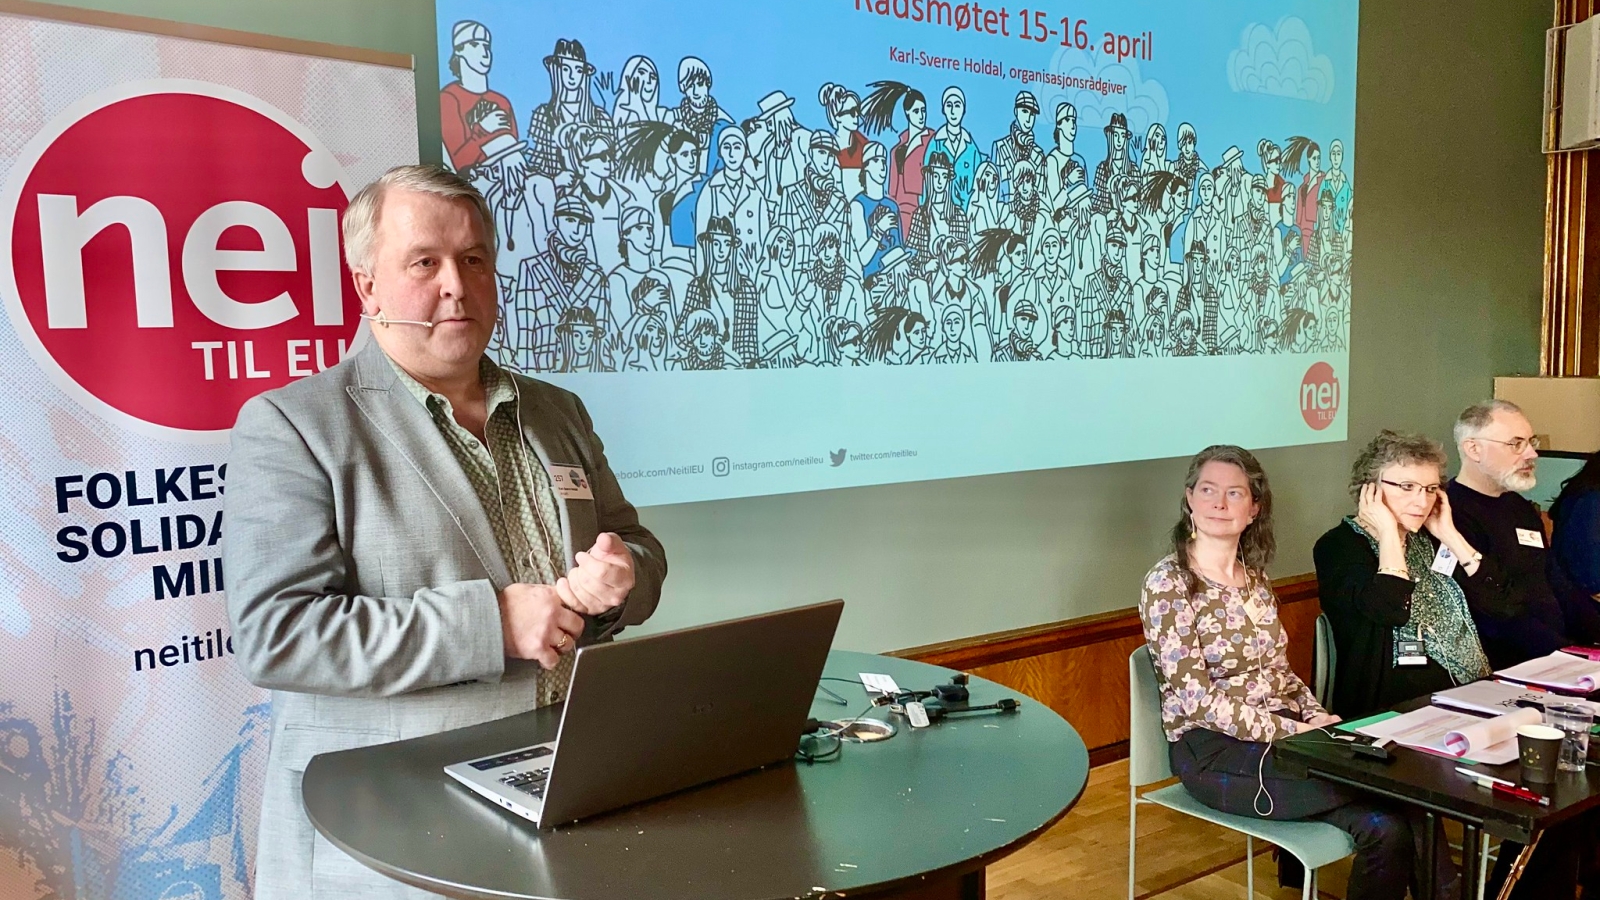 Karl-Sverre Holdal presenterer vervekampanjen på rådsmøtet 16. april 2023. 